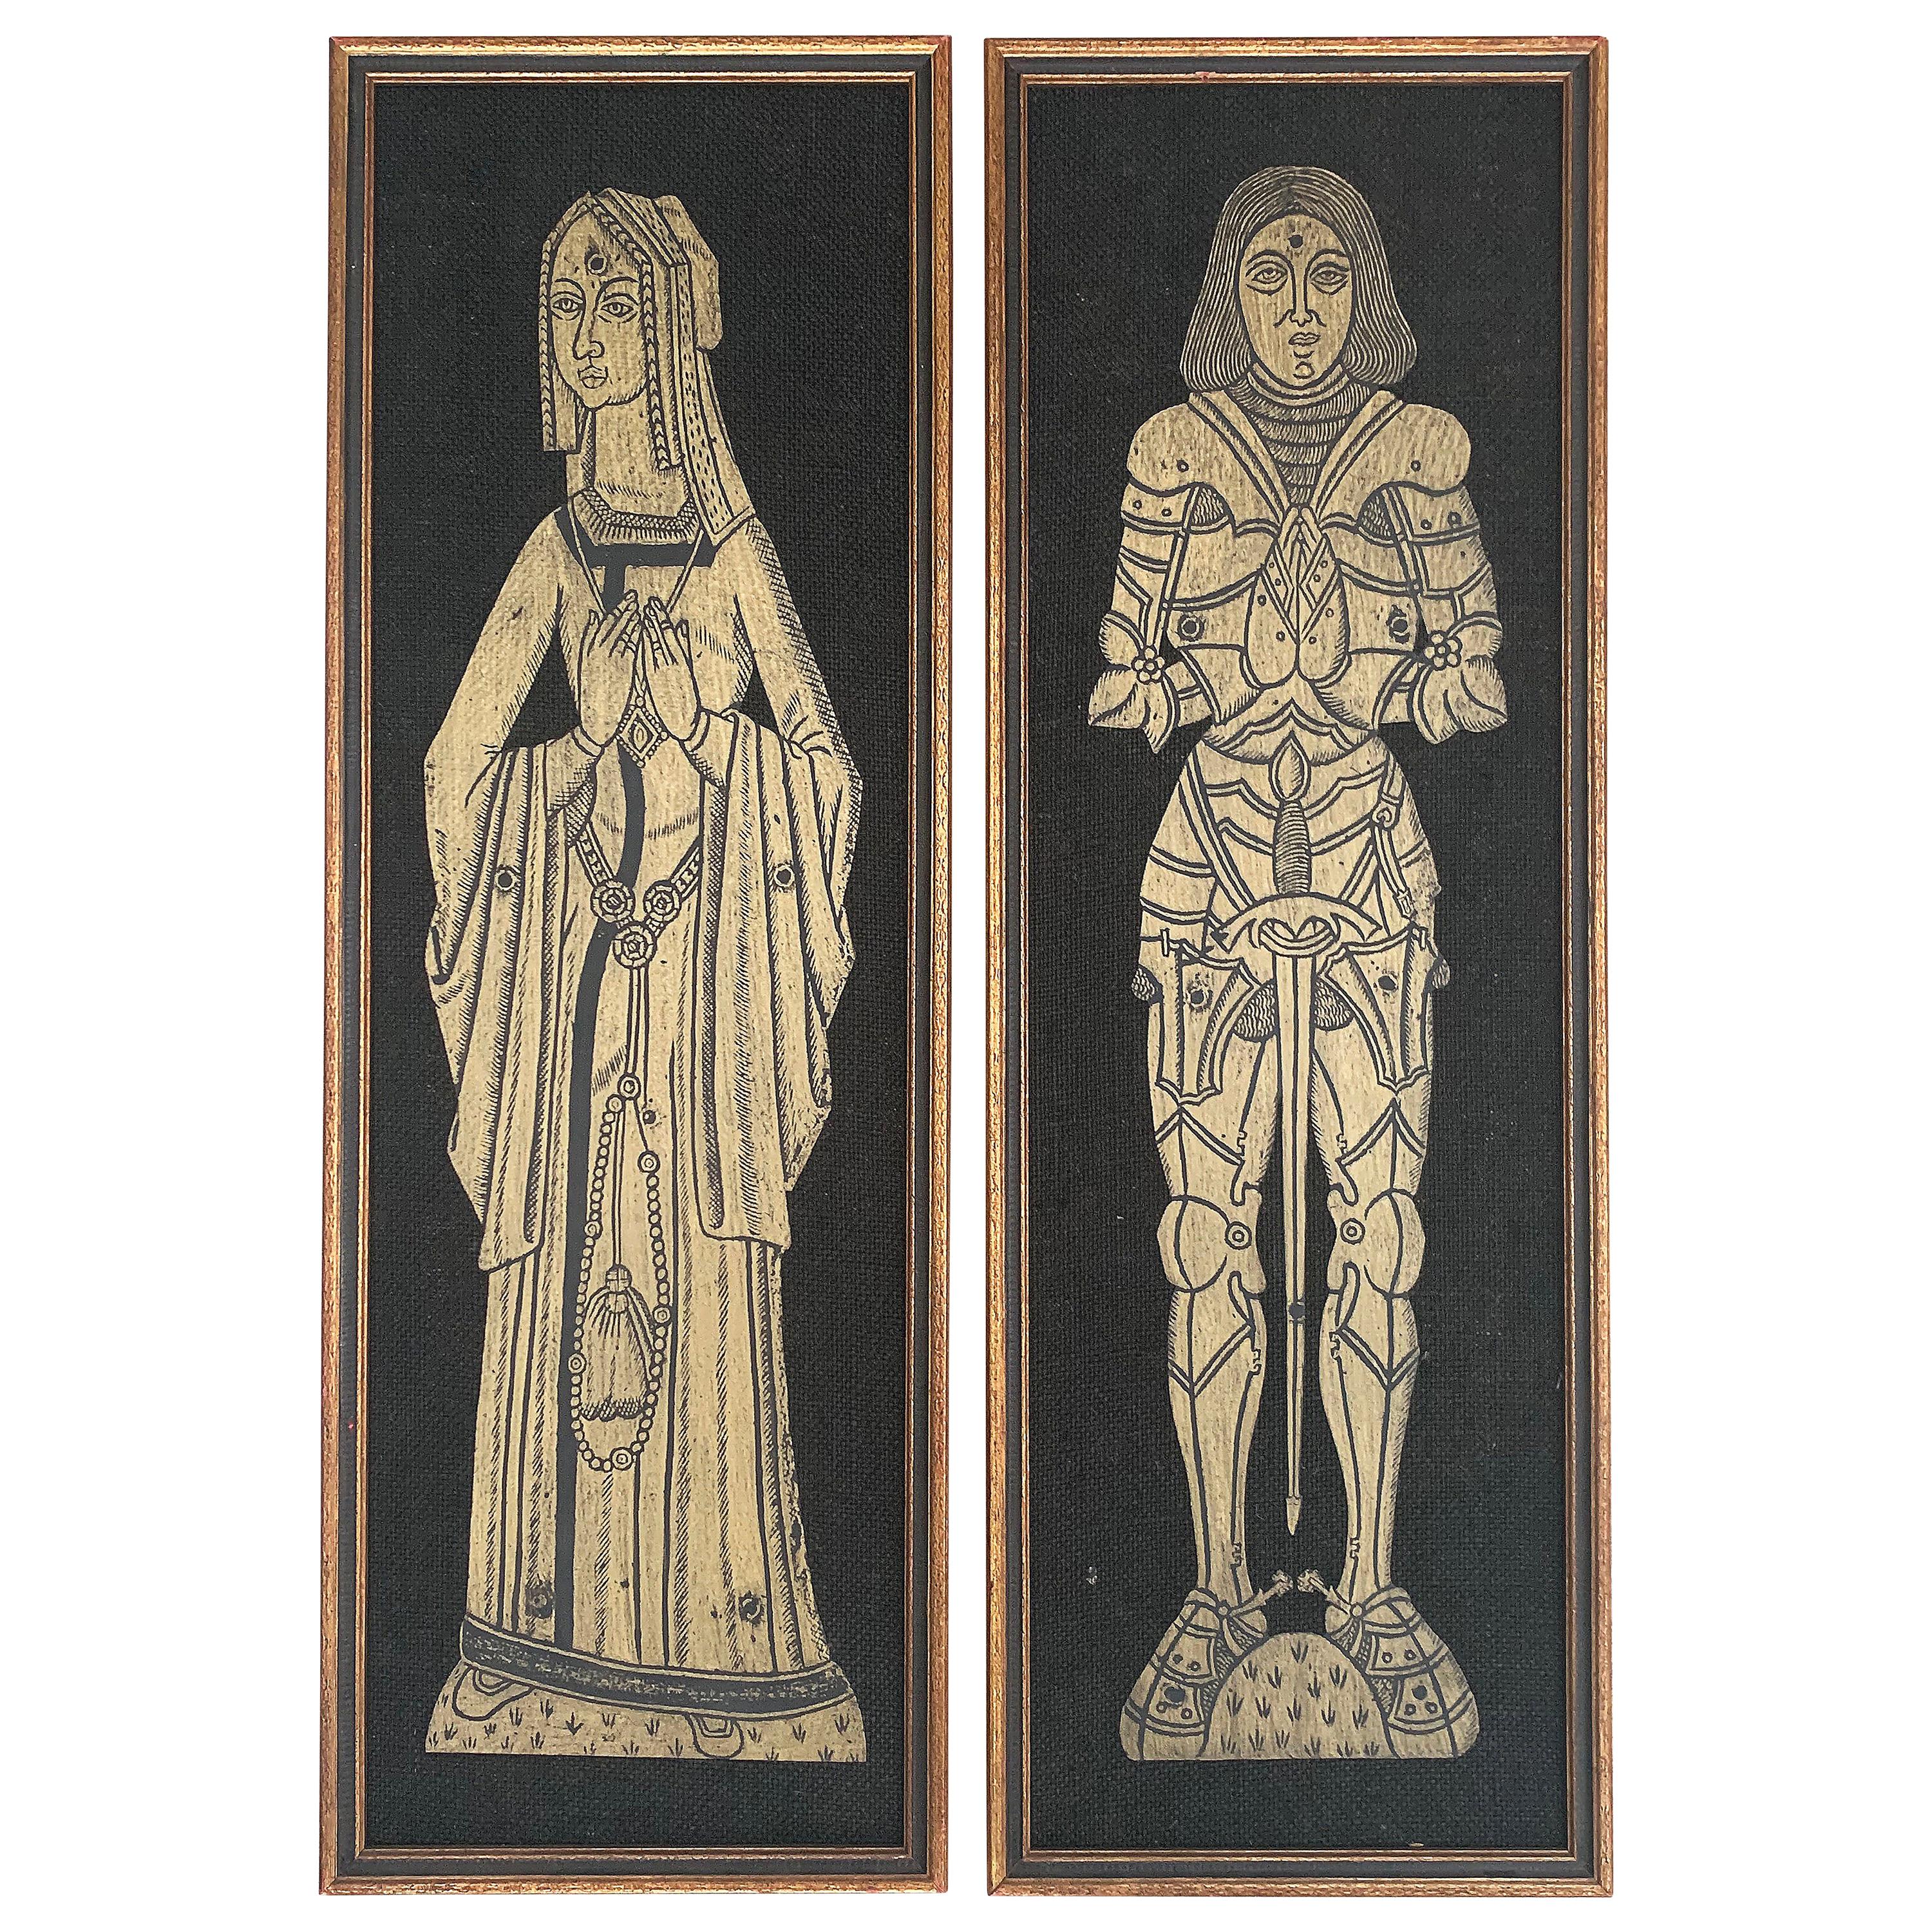 Pair of Brass Rubbings Art of 16th-17th Century Figures on Burlap